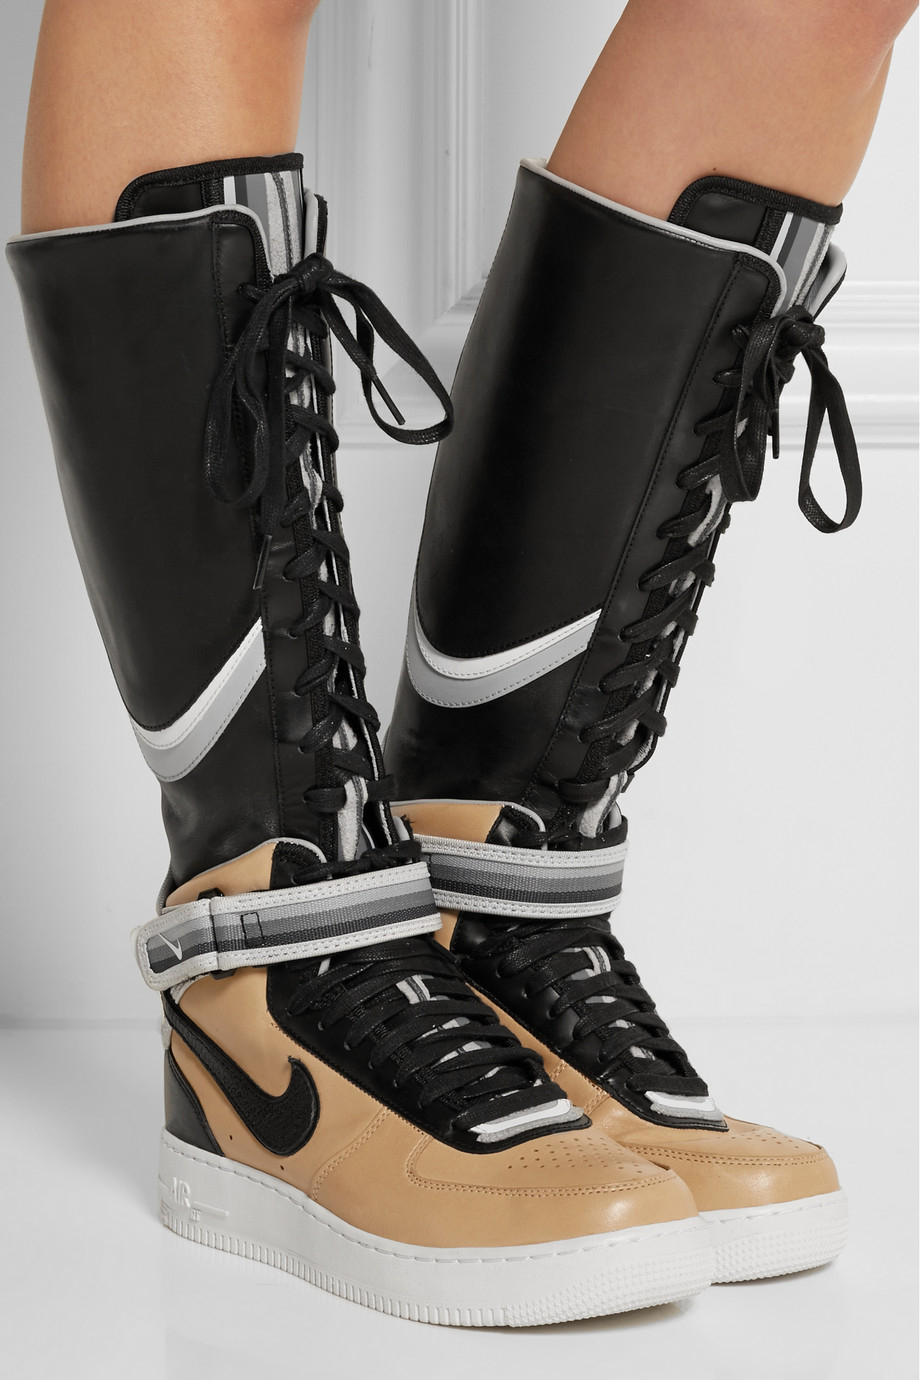 Lyst - Nike + Riccardo Tisci Air Force 1 Leather High-Top Sneakers in Black